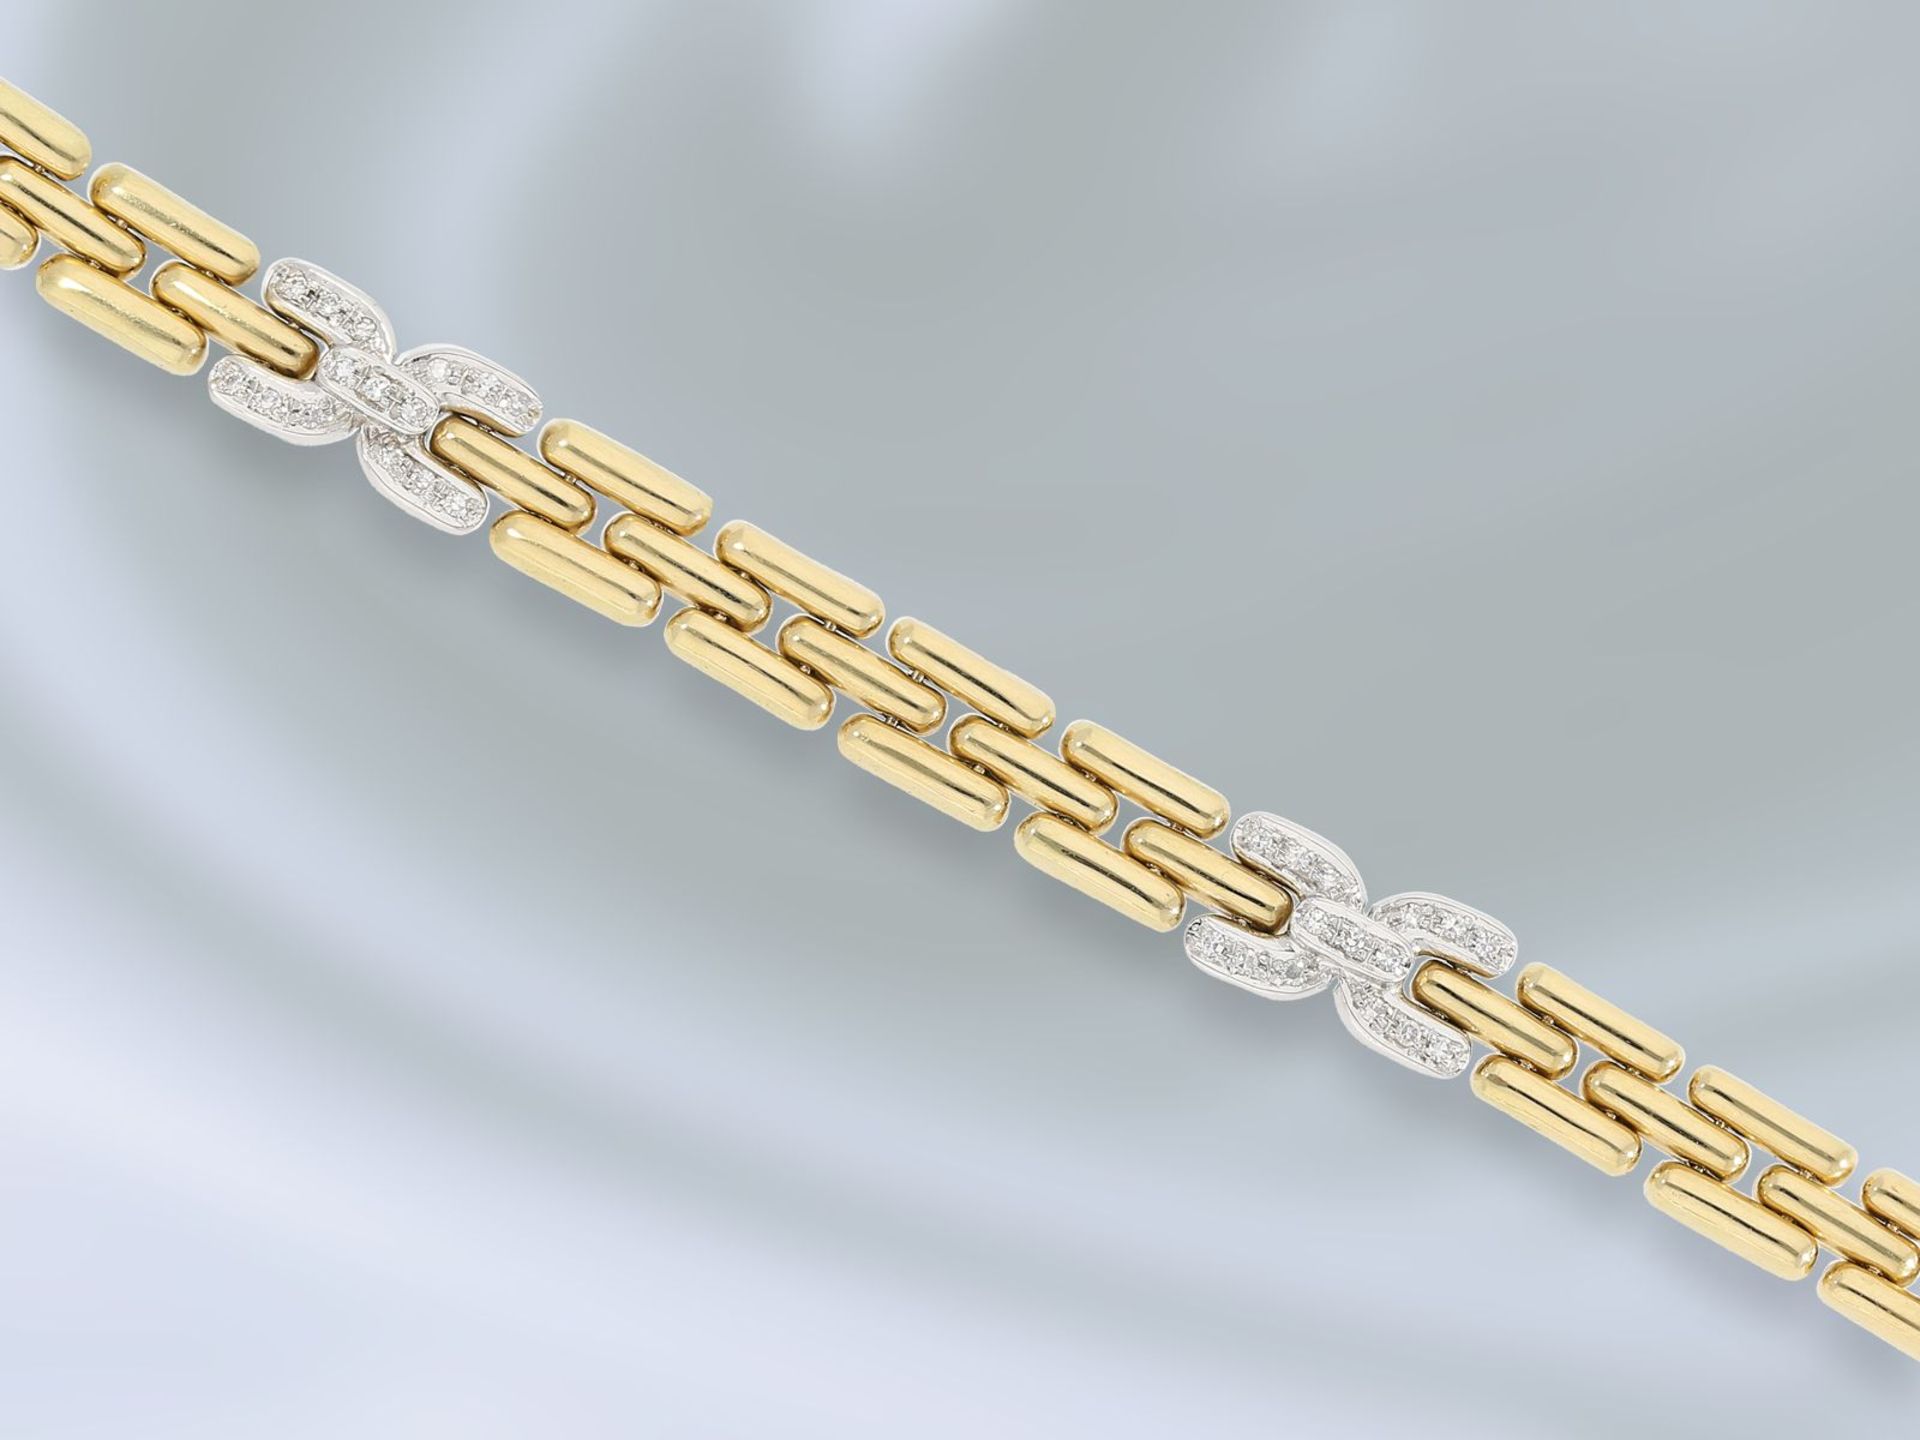 Armband: dekoratives, goldenes Armband mit Diamantbesatz, ca. 0,3ct Ca. 18cm lang, ca. 8mm breit, - Bild 2 aus 2